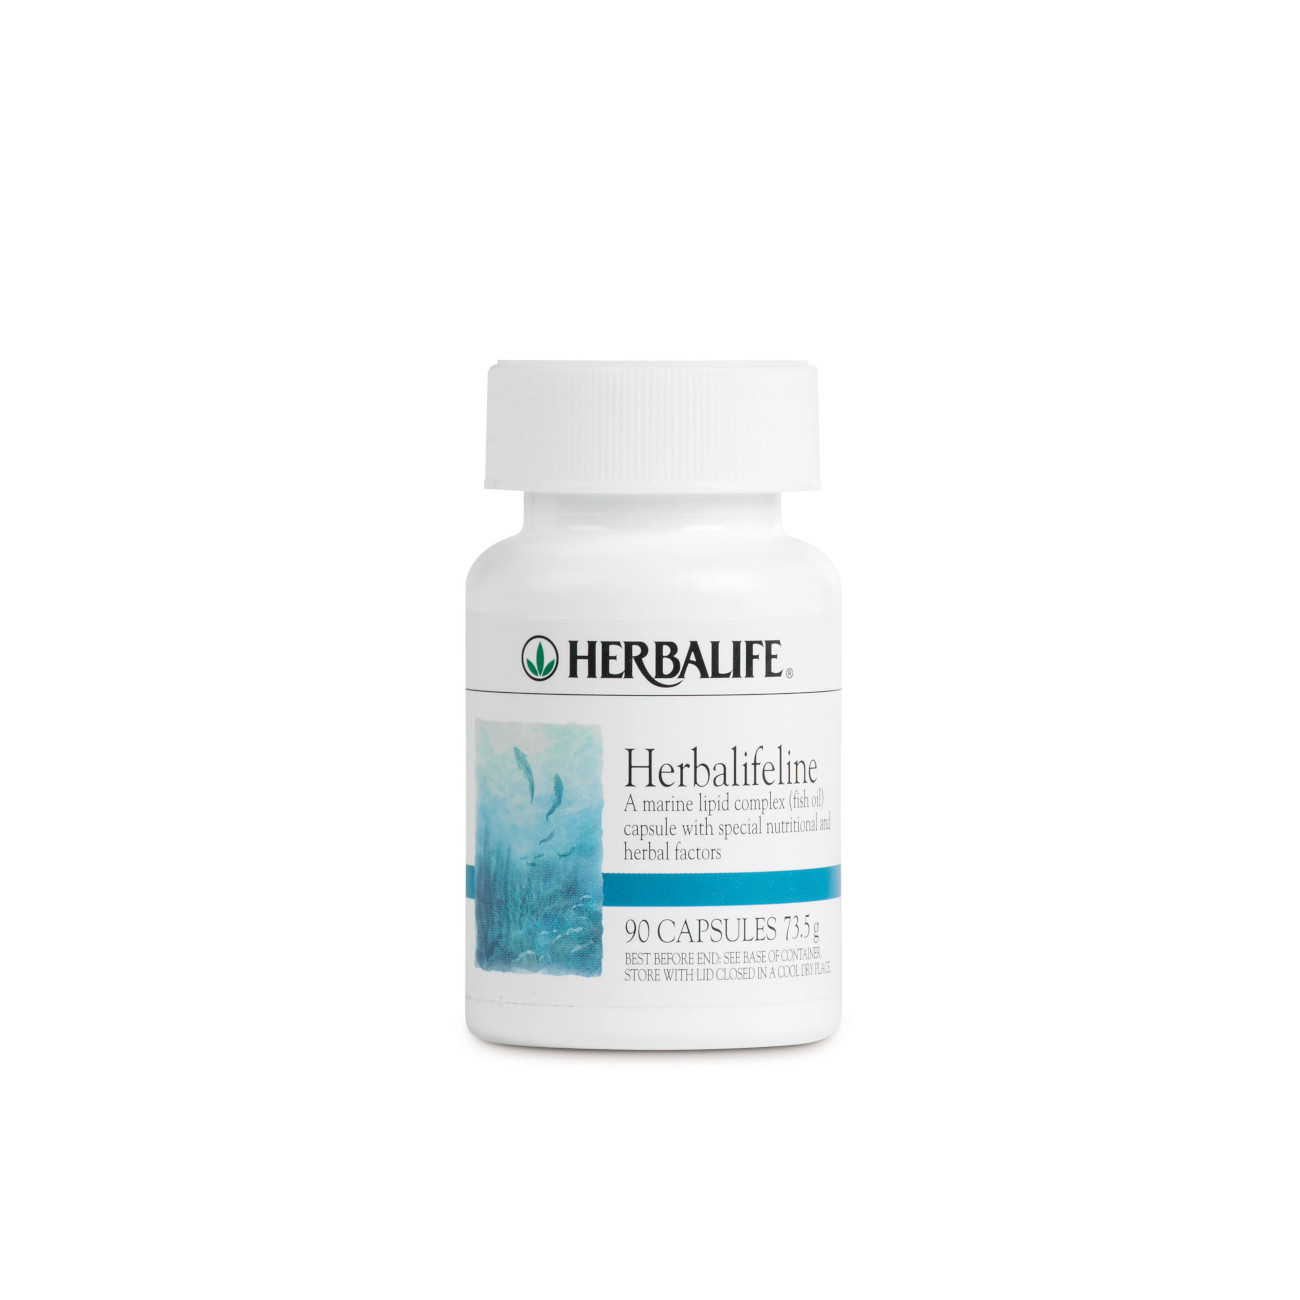 HerbalifelineÂ®   product shot